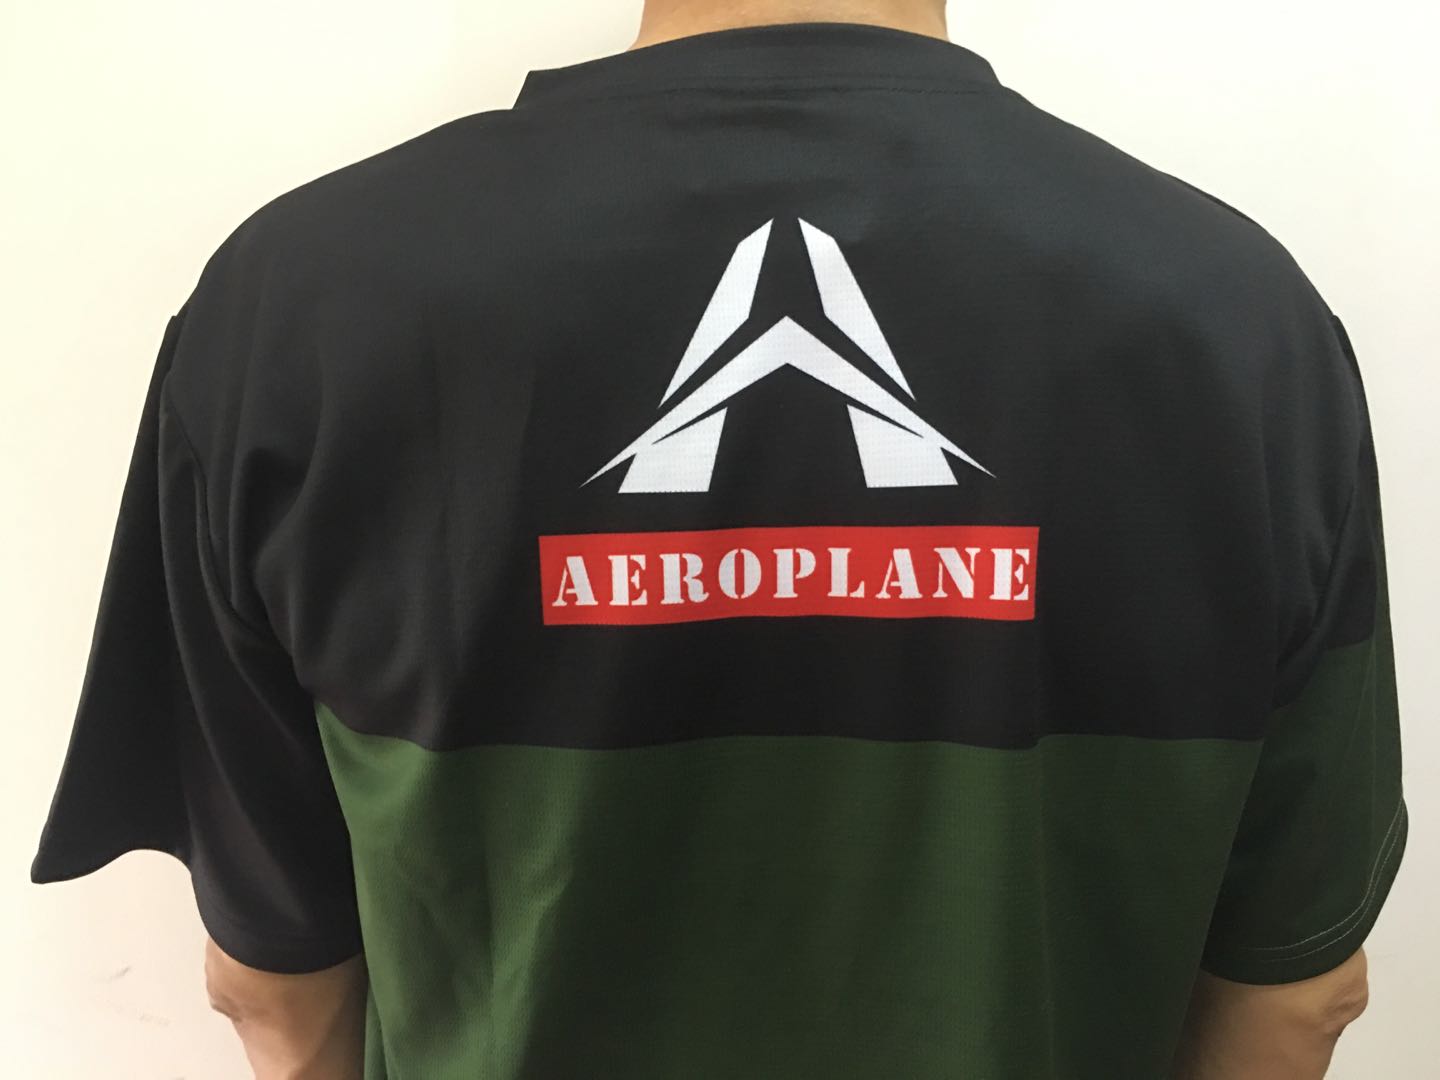 noble-brand jersey of Aeroplane